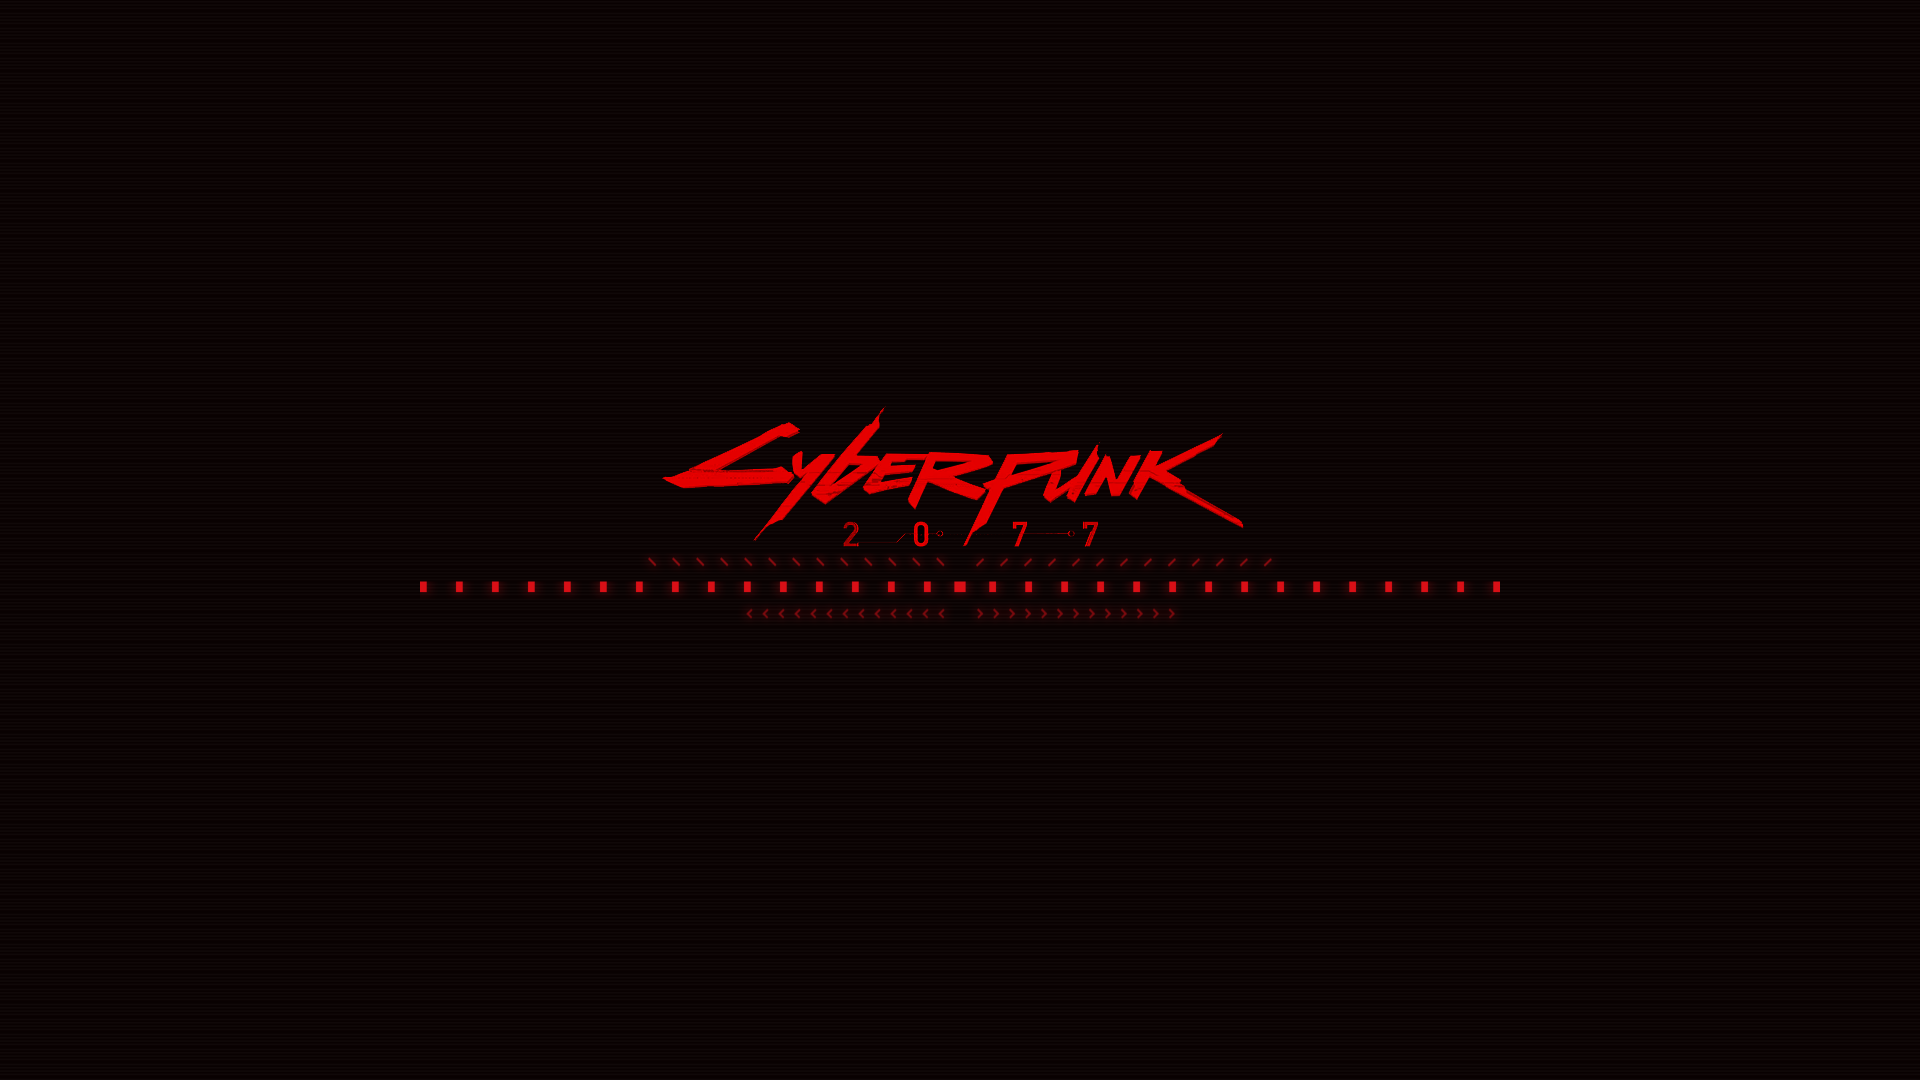 A cyberpunk logo of the letter 